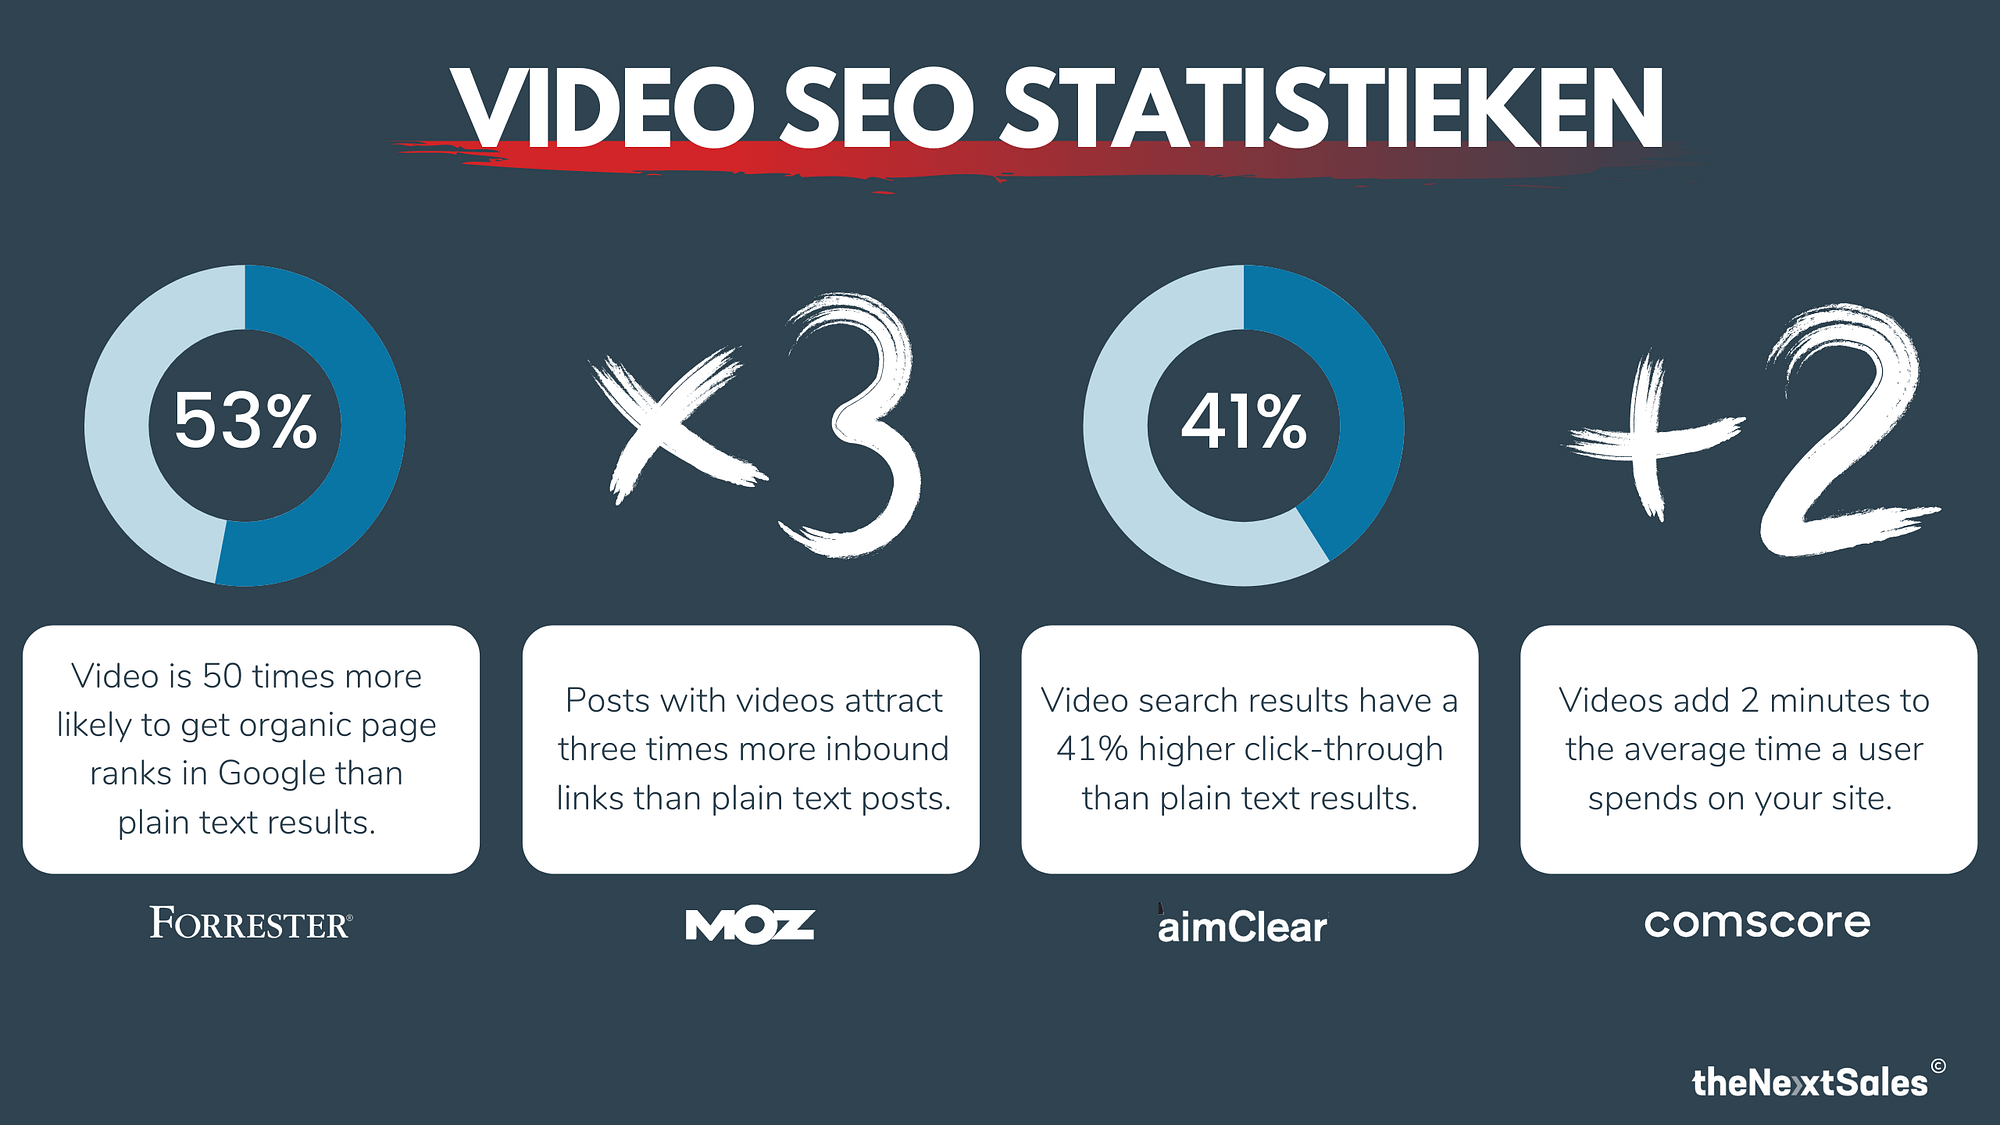 Video marketing stats